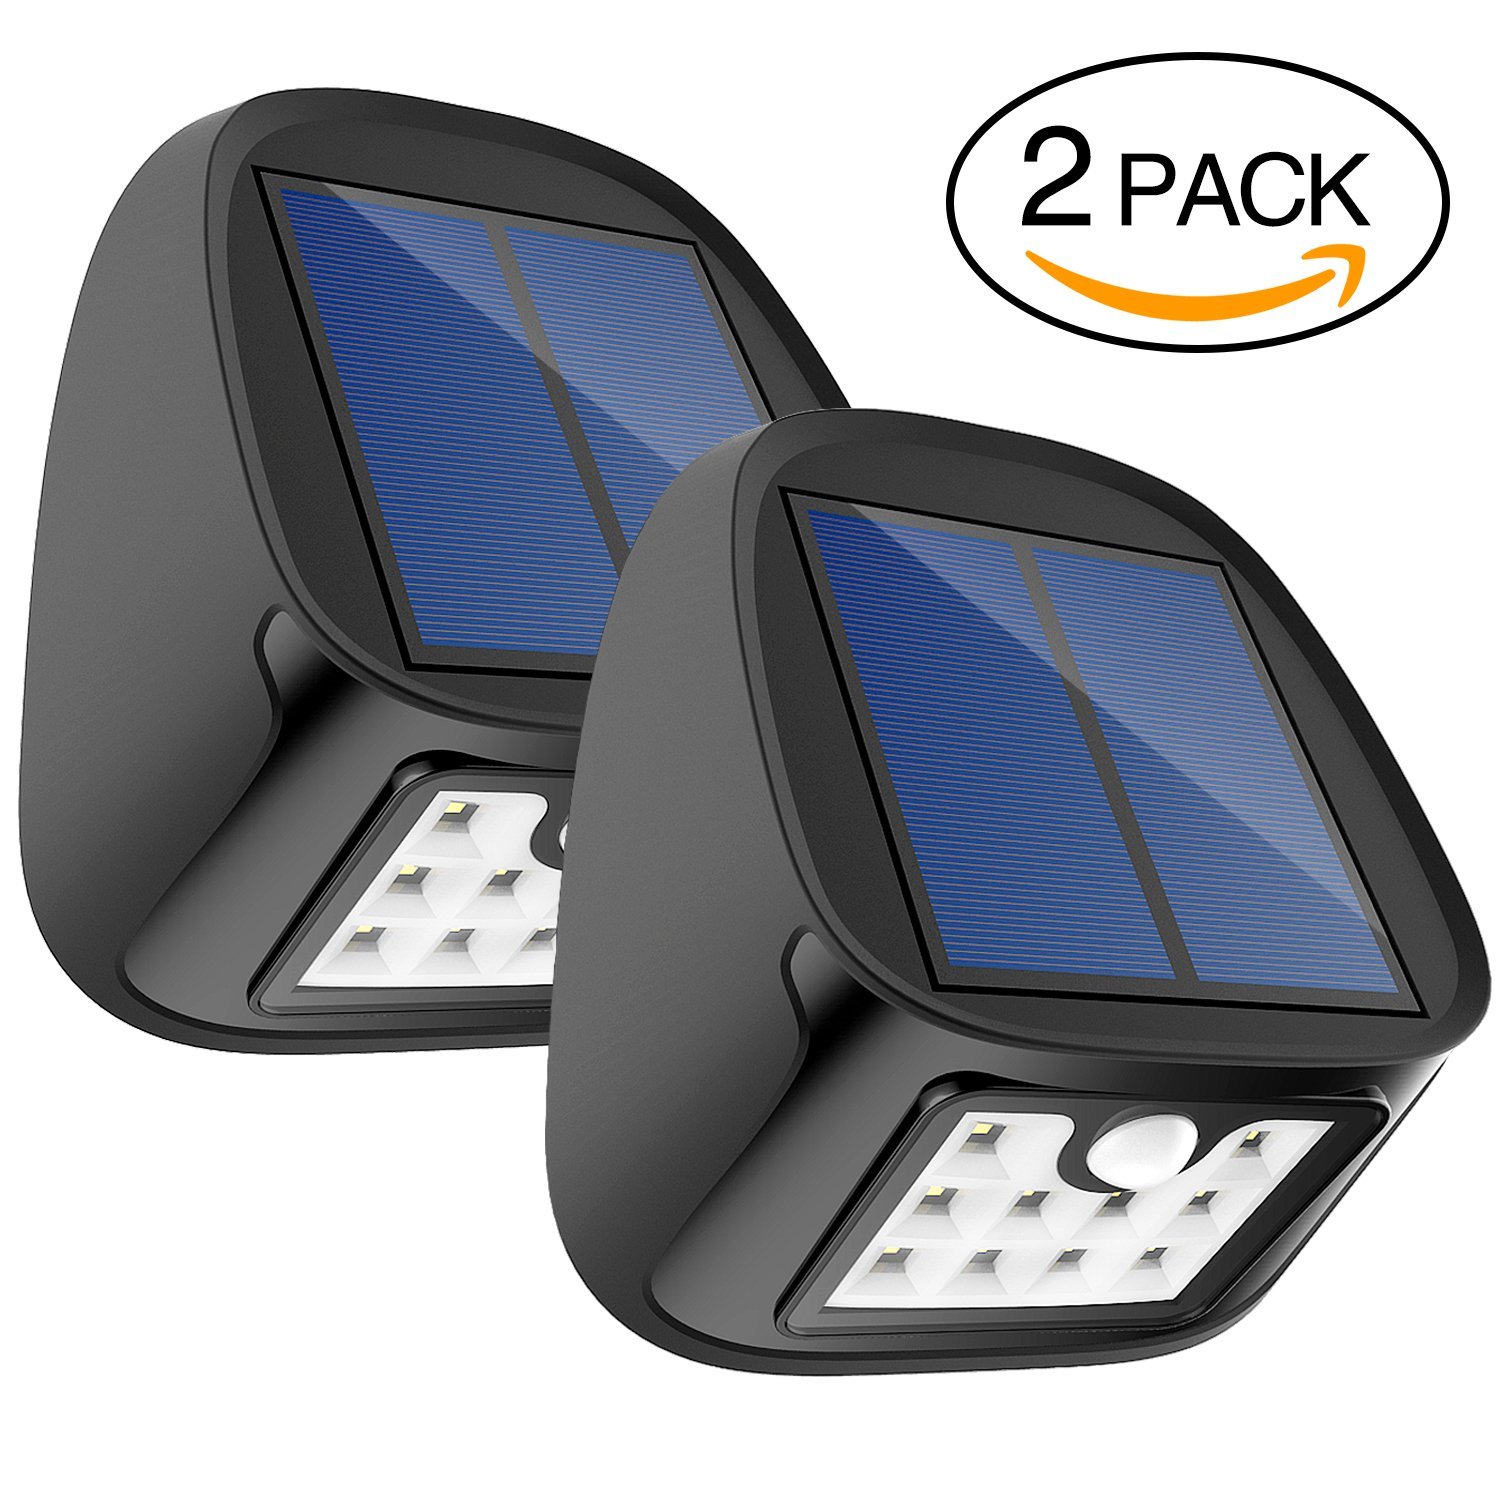 2-pack waterproof outdoor wireless motion sensor solar LED Lights for $8